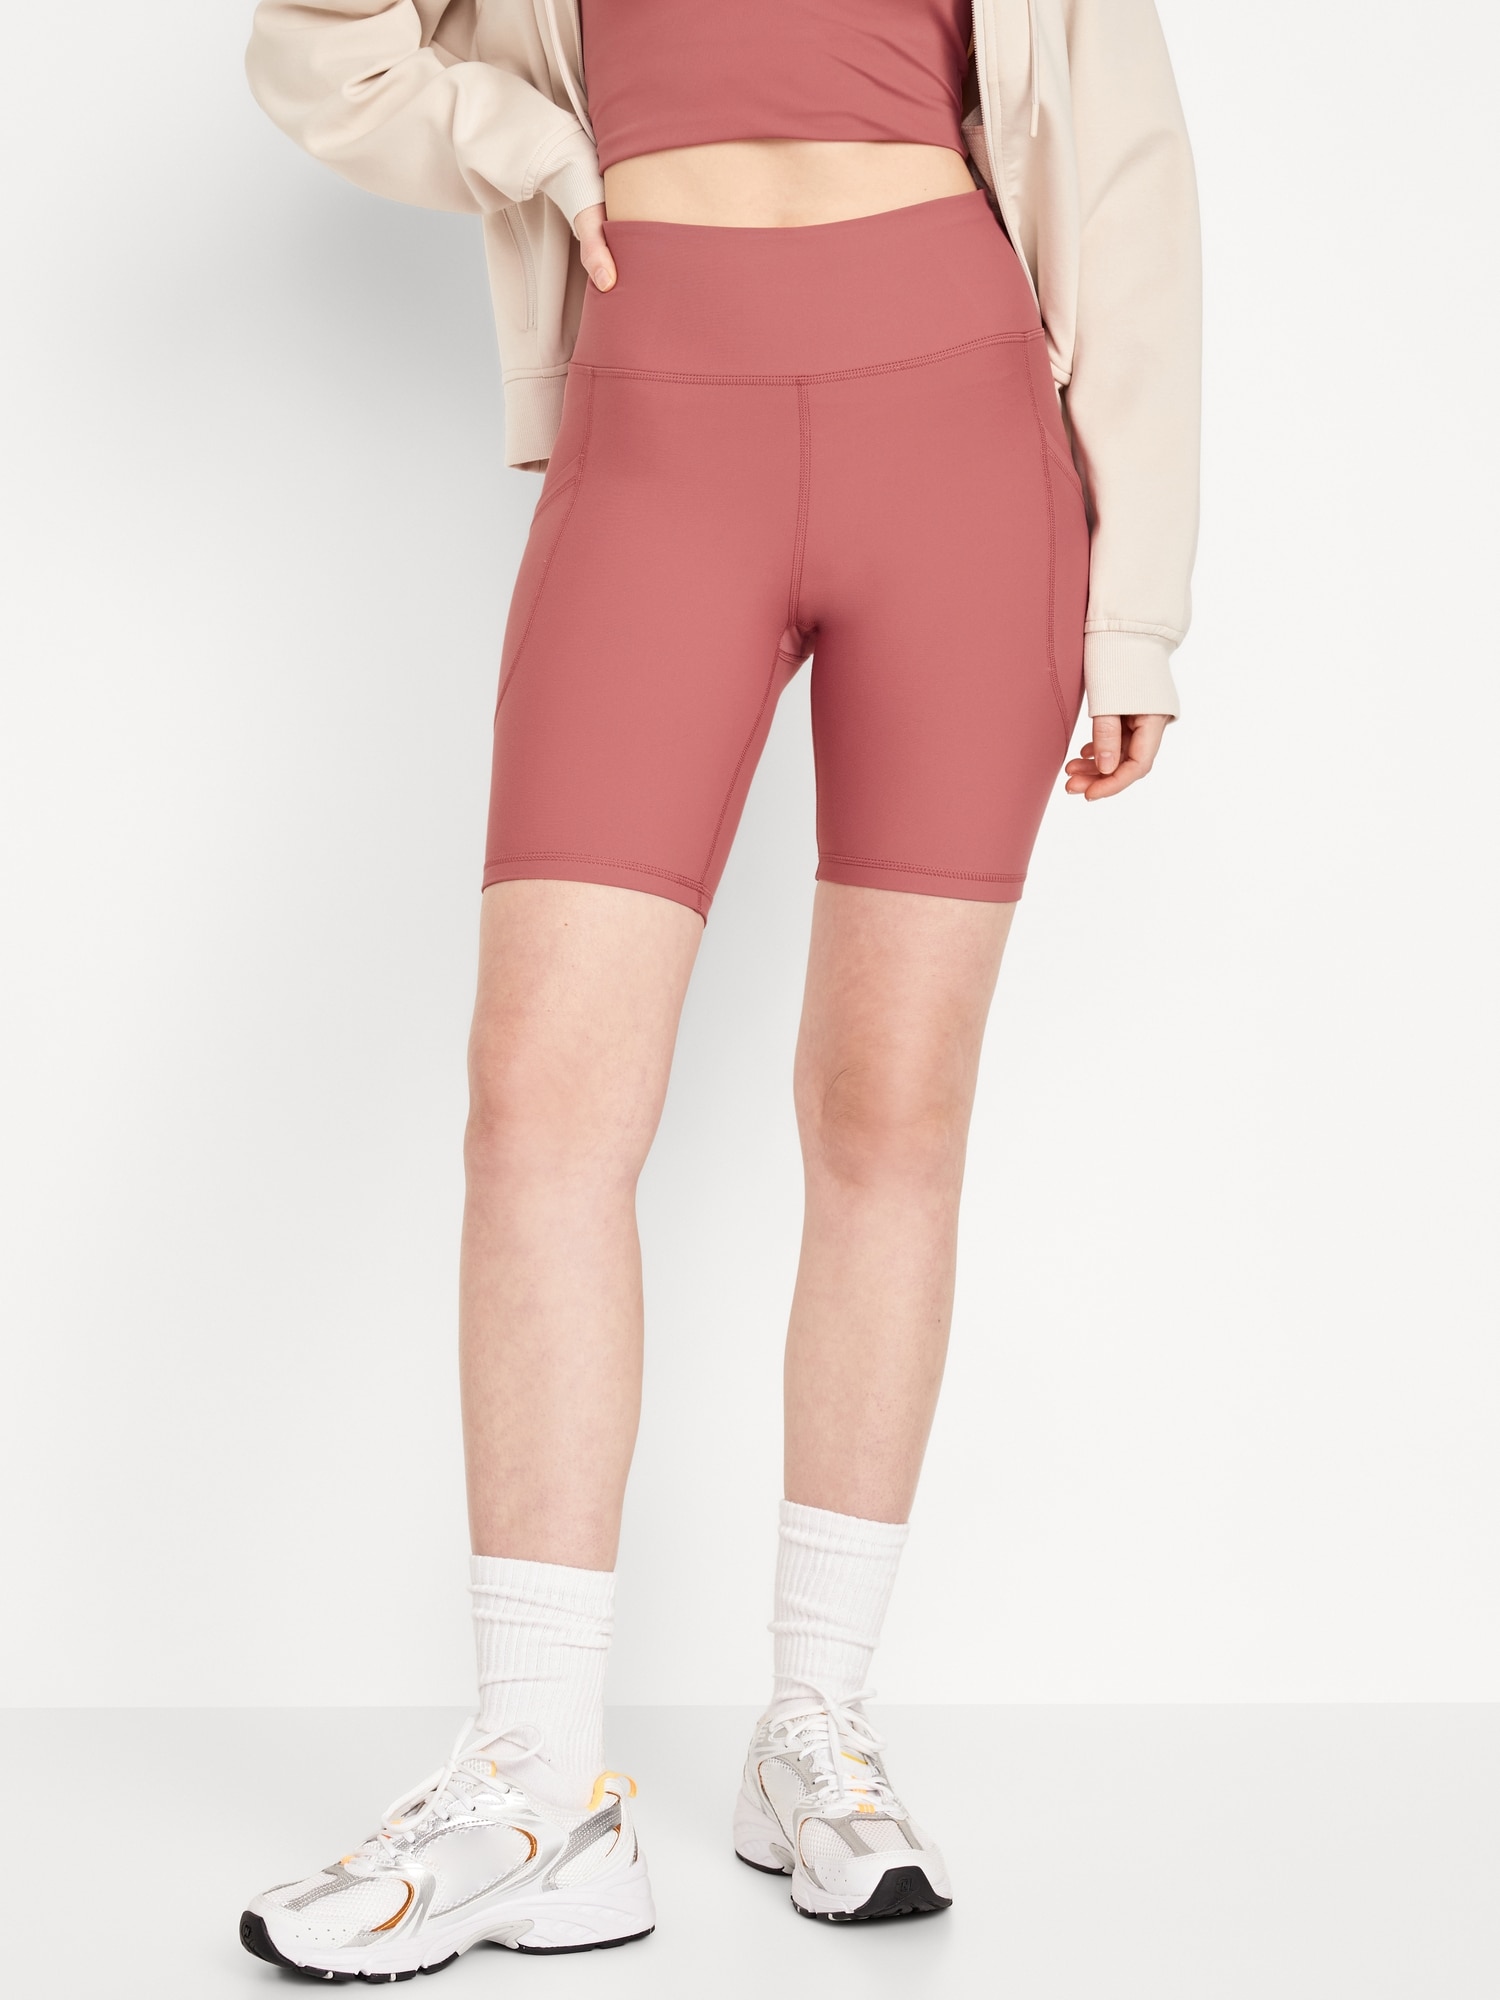 VALANDY Biker Shorts for Women High Waisted Workout Shorts for Women Yoga  Pants 8 Soft Opaque - - L-x-L - ShopStyle